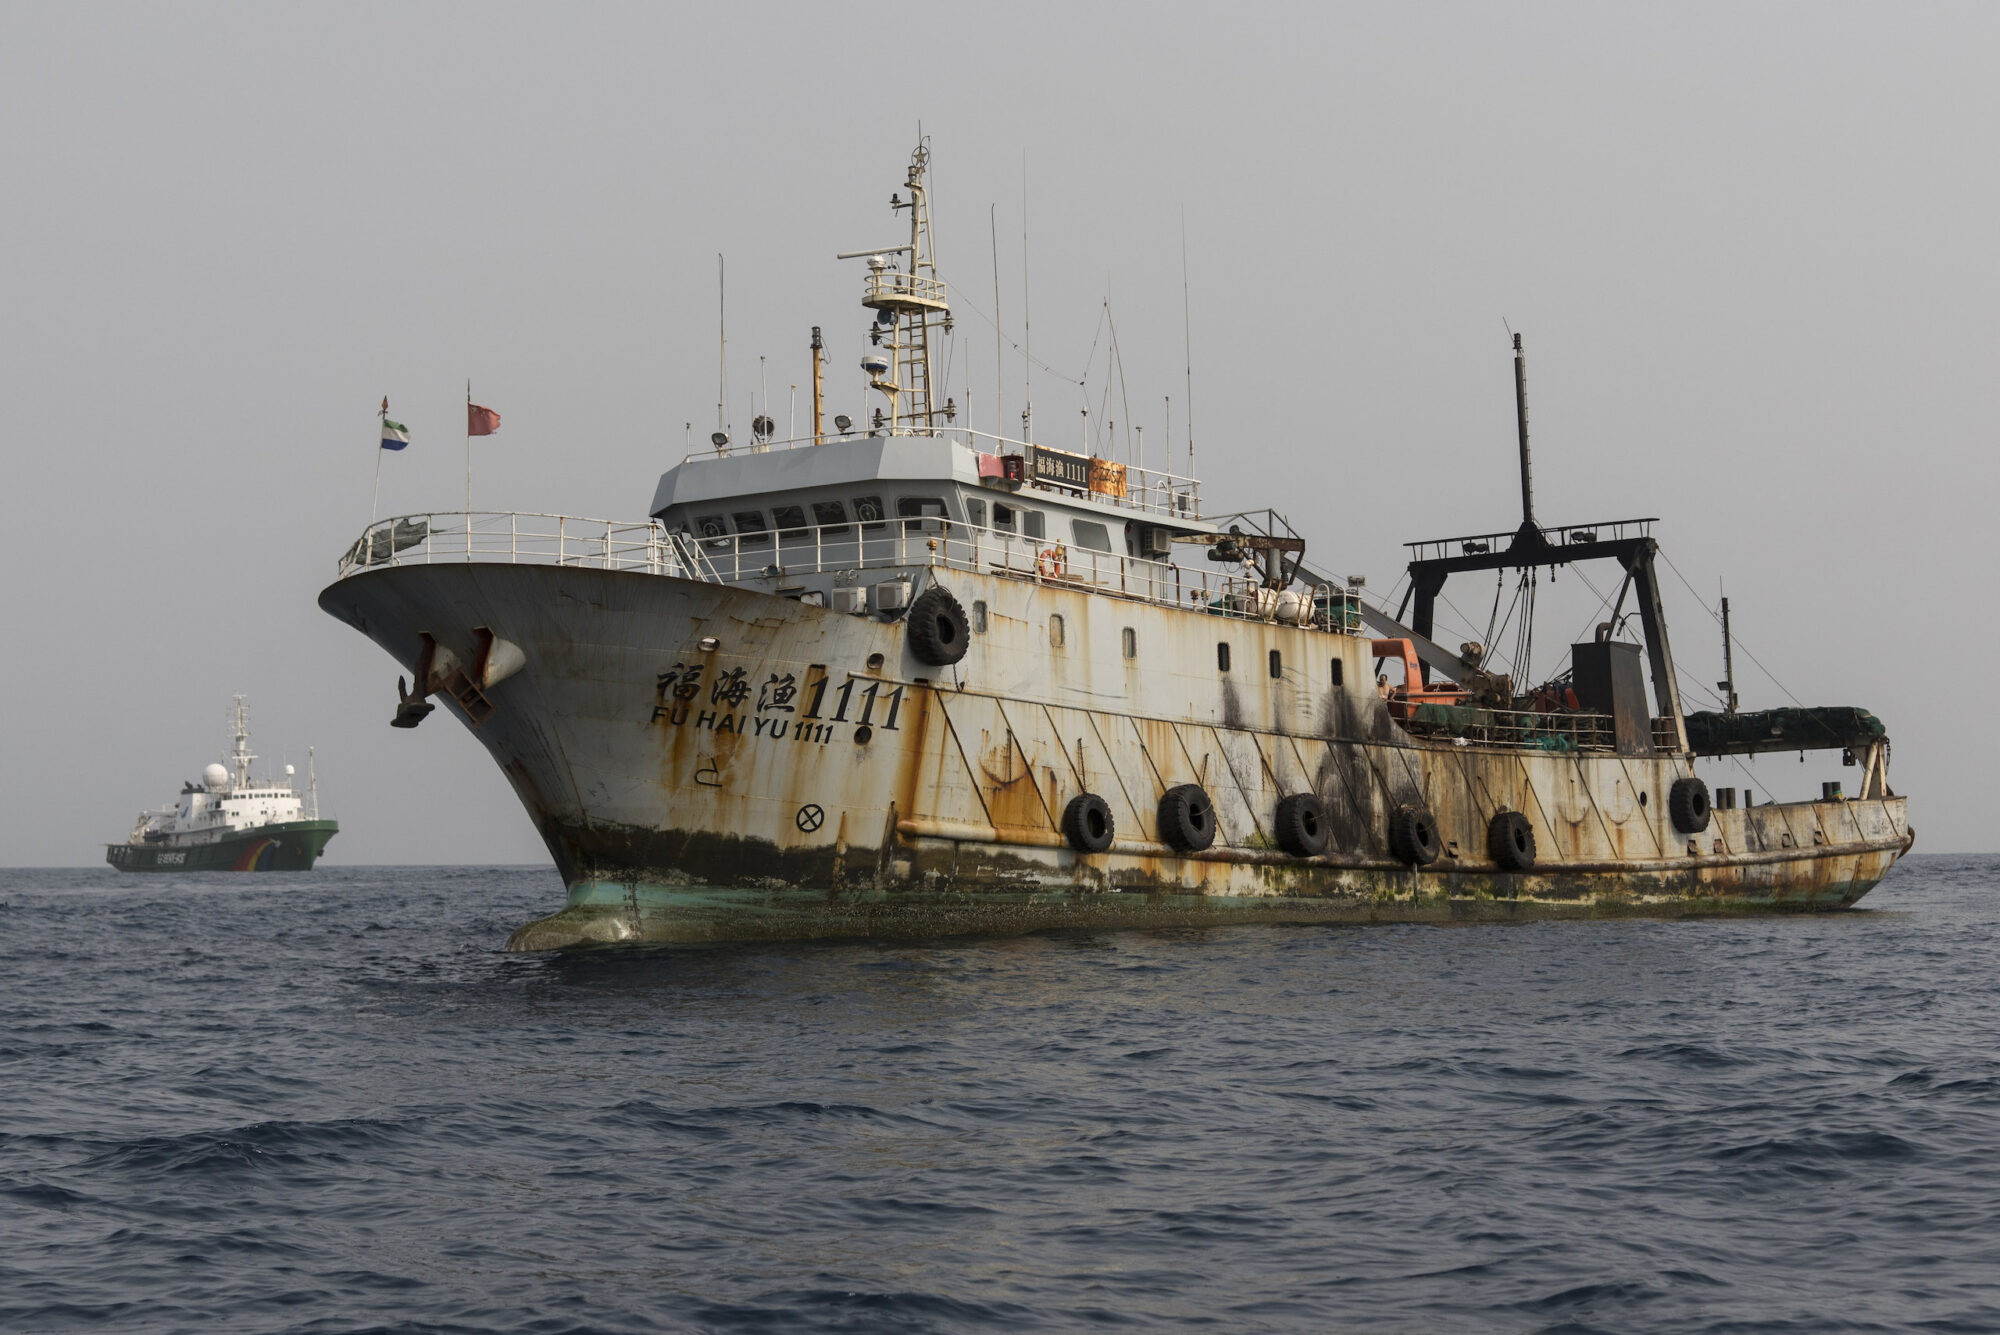 High sea control of Chinese fishing trawler FU HAI YU 1111 by Sierra Leone fishery inspectors